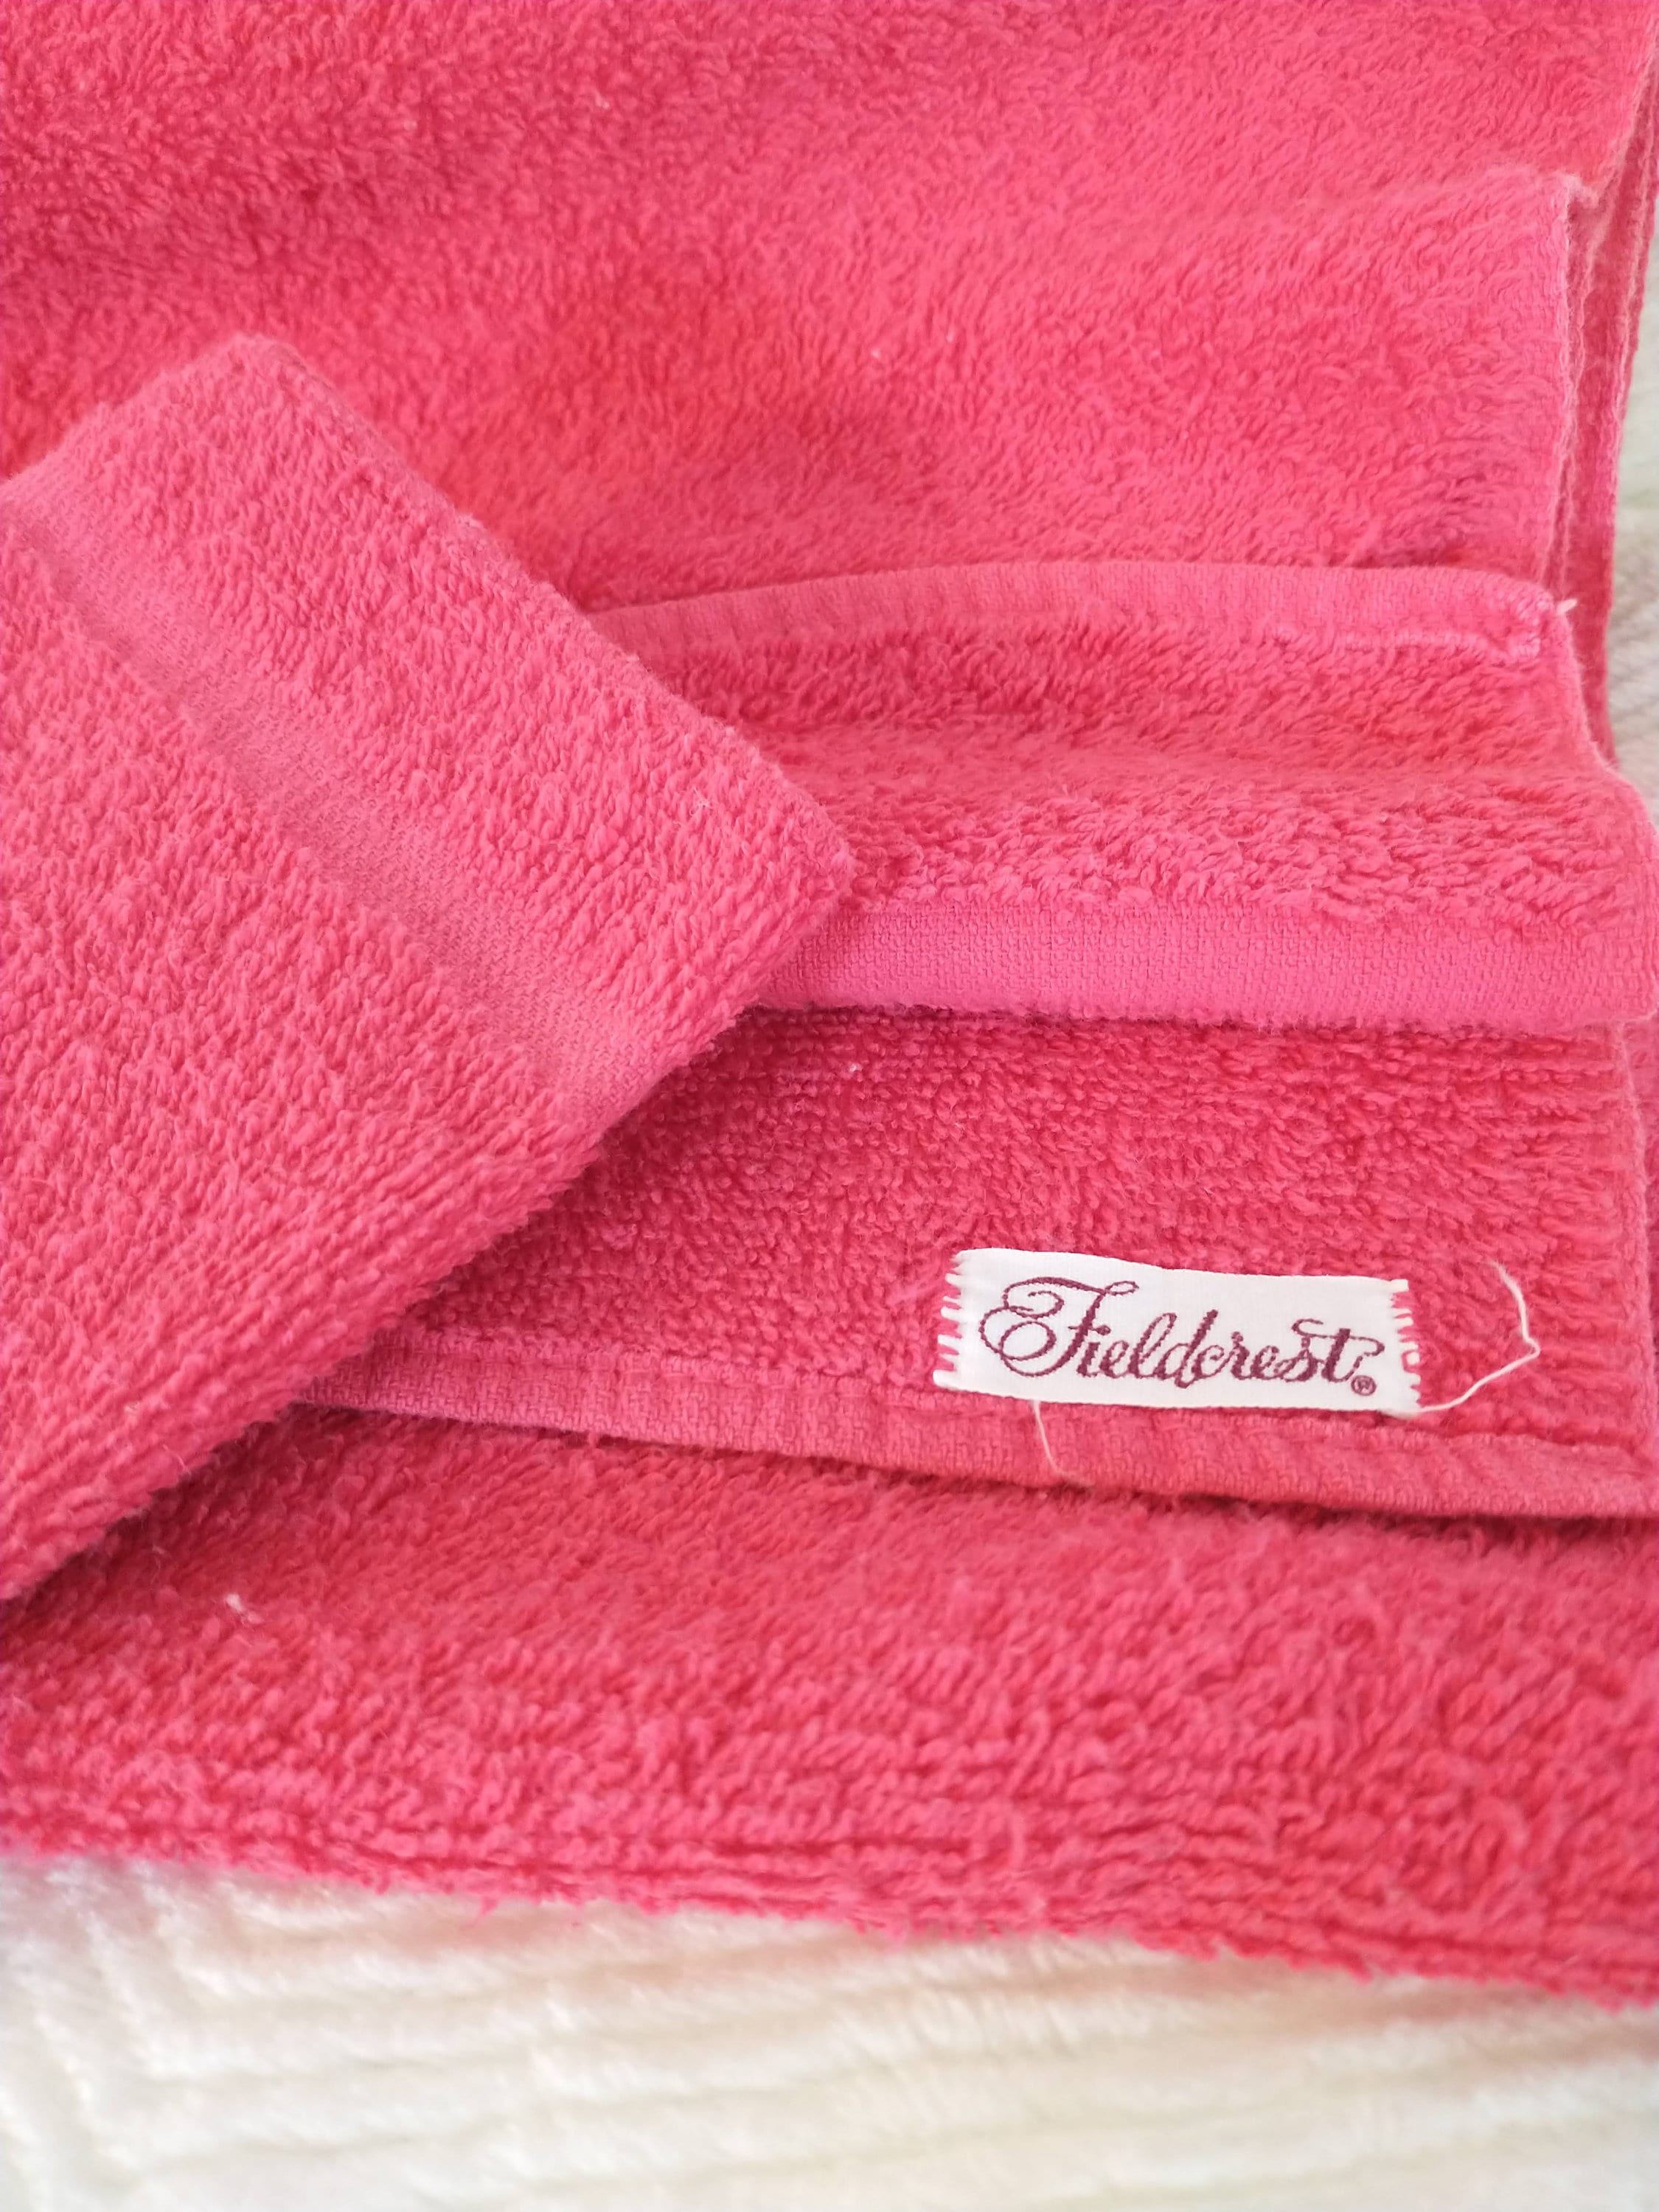 Vintage Fieldcrest bath towel Country Sampler Red Gold Green 40 x 24